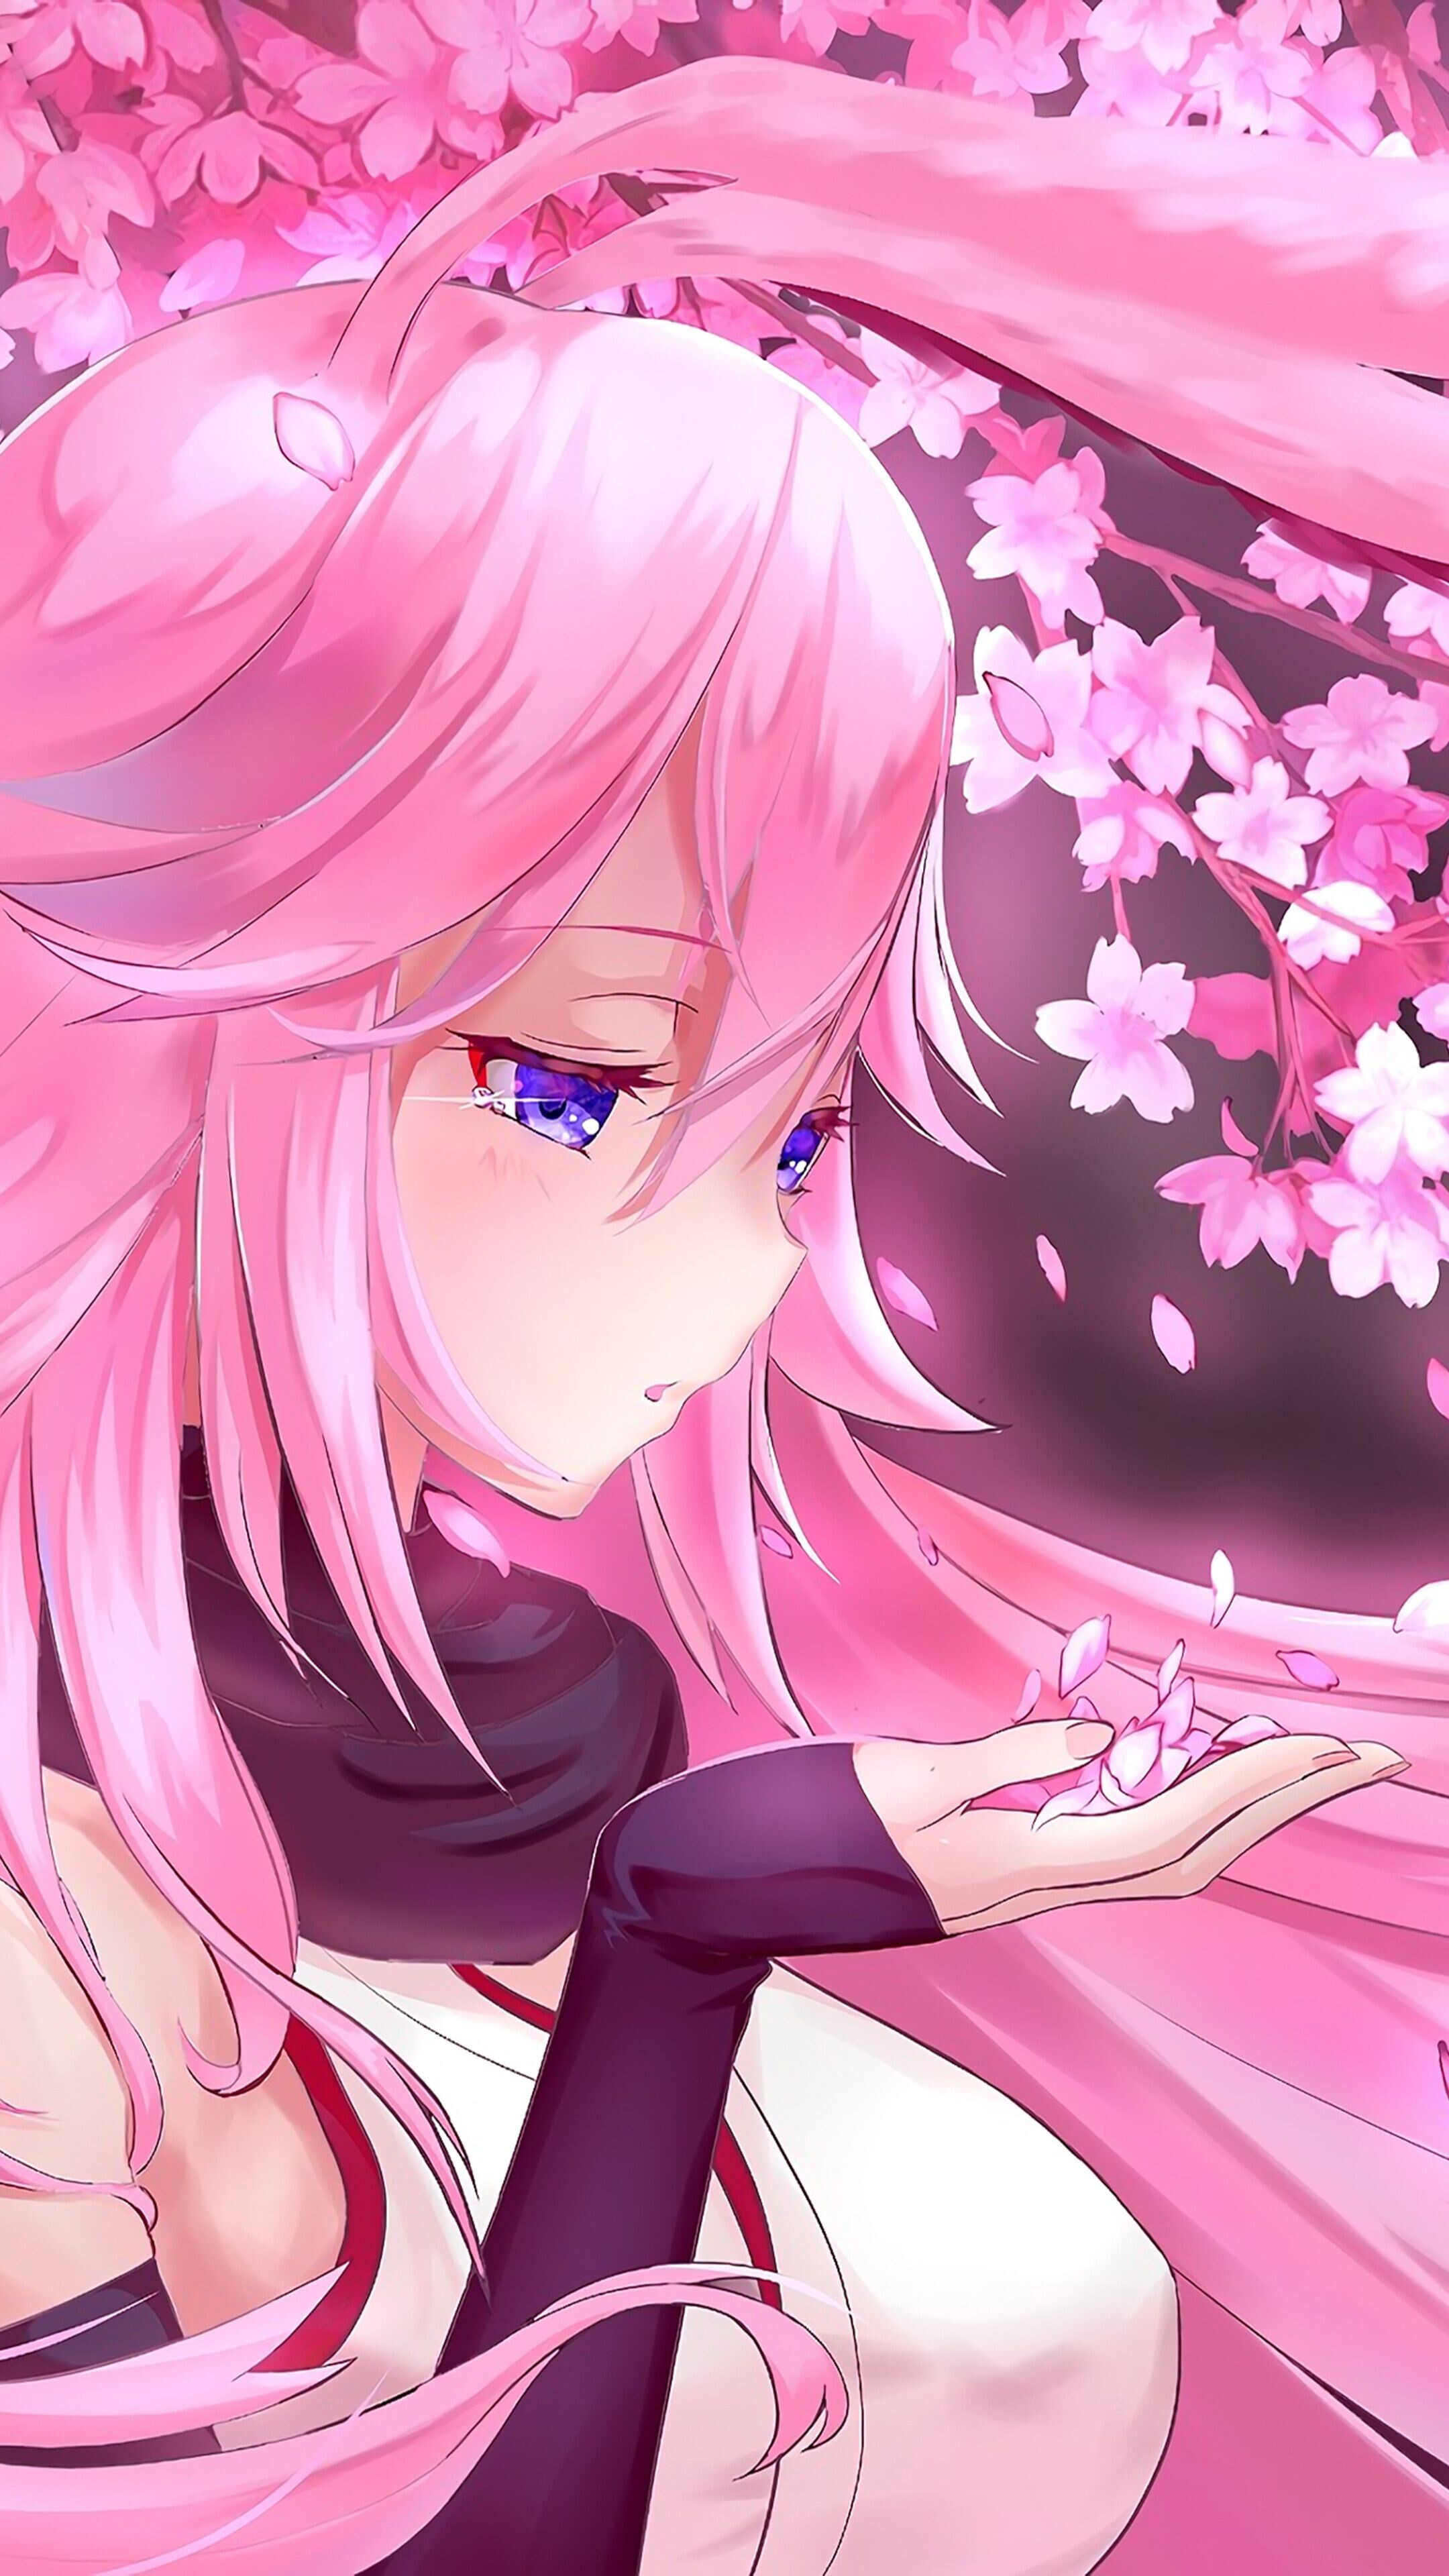 Girly: Sakura Miku Hatsune, The arrival of spring, Pink hair, Tenderness. 2160x3840 4K Background.